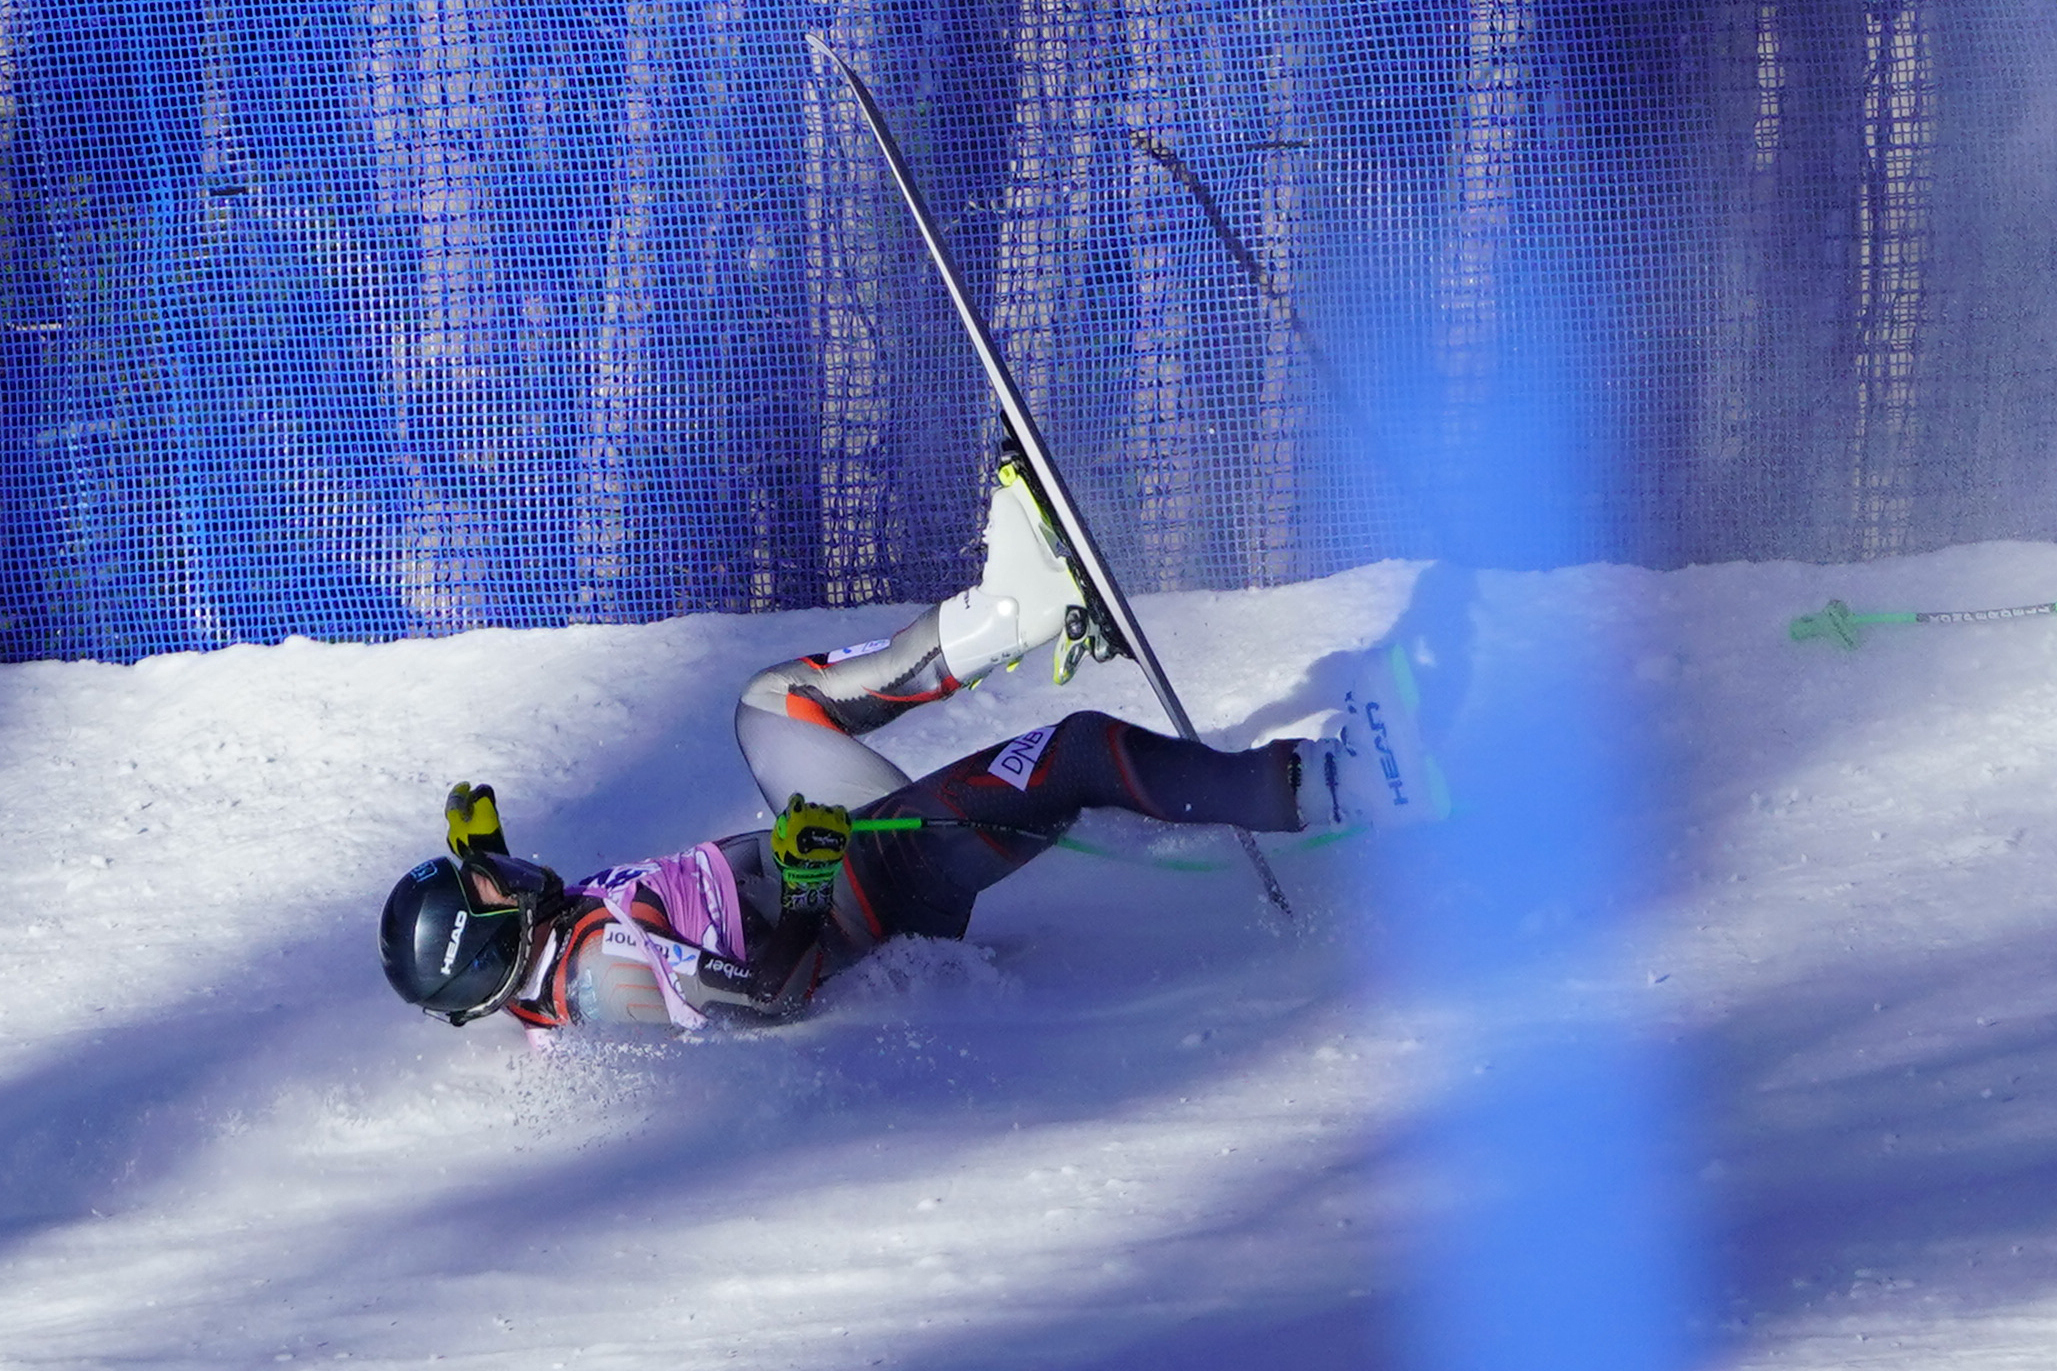 Kjetil Jansrud nach seinem Sturz beim Ski Weltcup in Beaver Creek